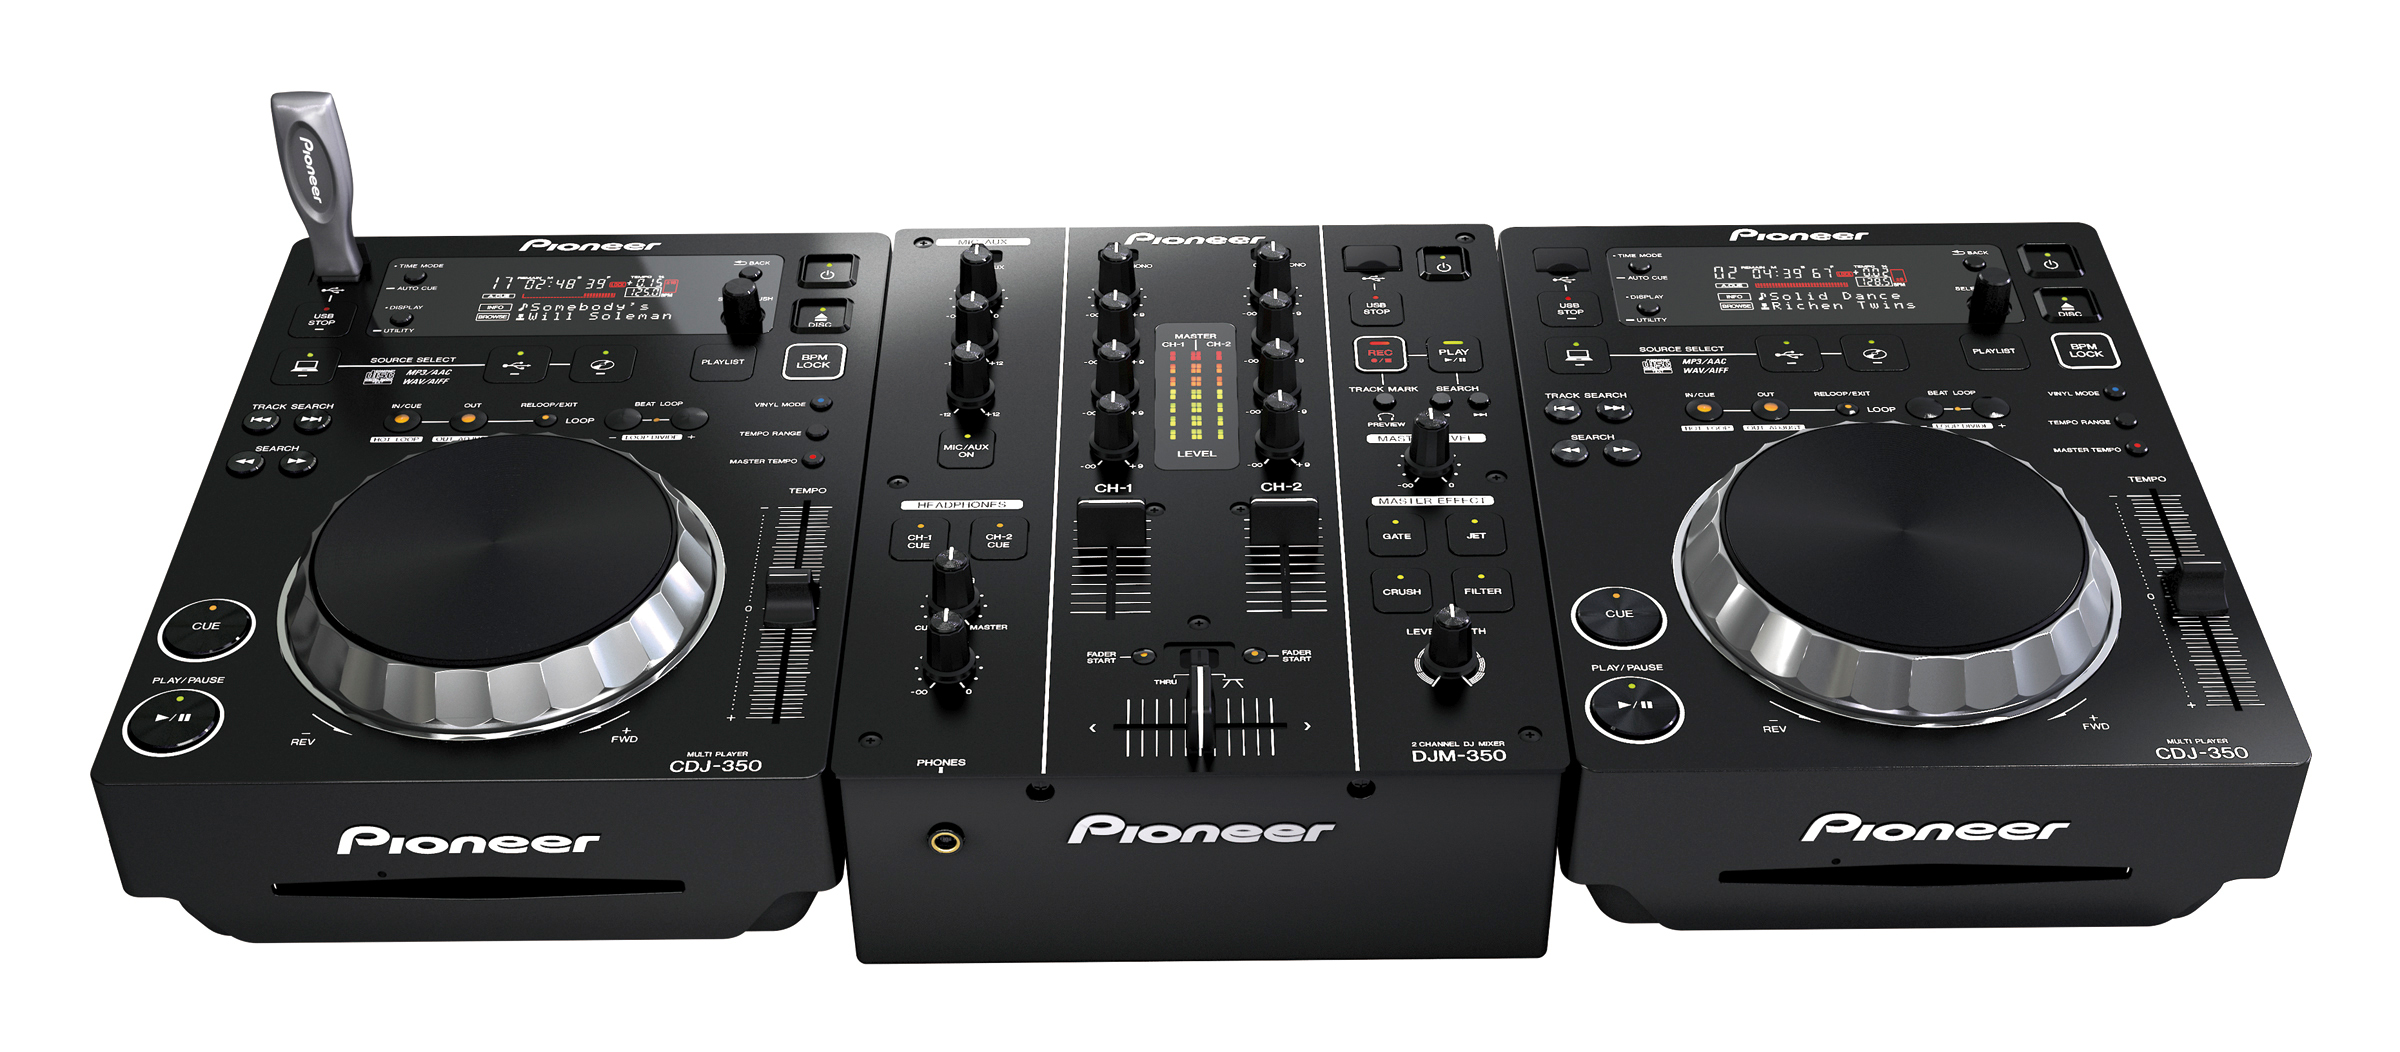 Pioneer Announces CDJ-350 & DJM-350 | CHRIS GRANNELL'S BRAIN DUMP!